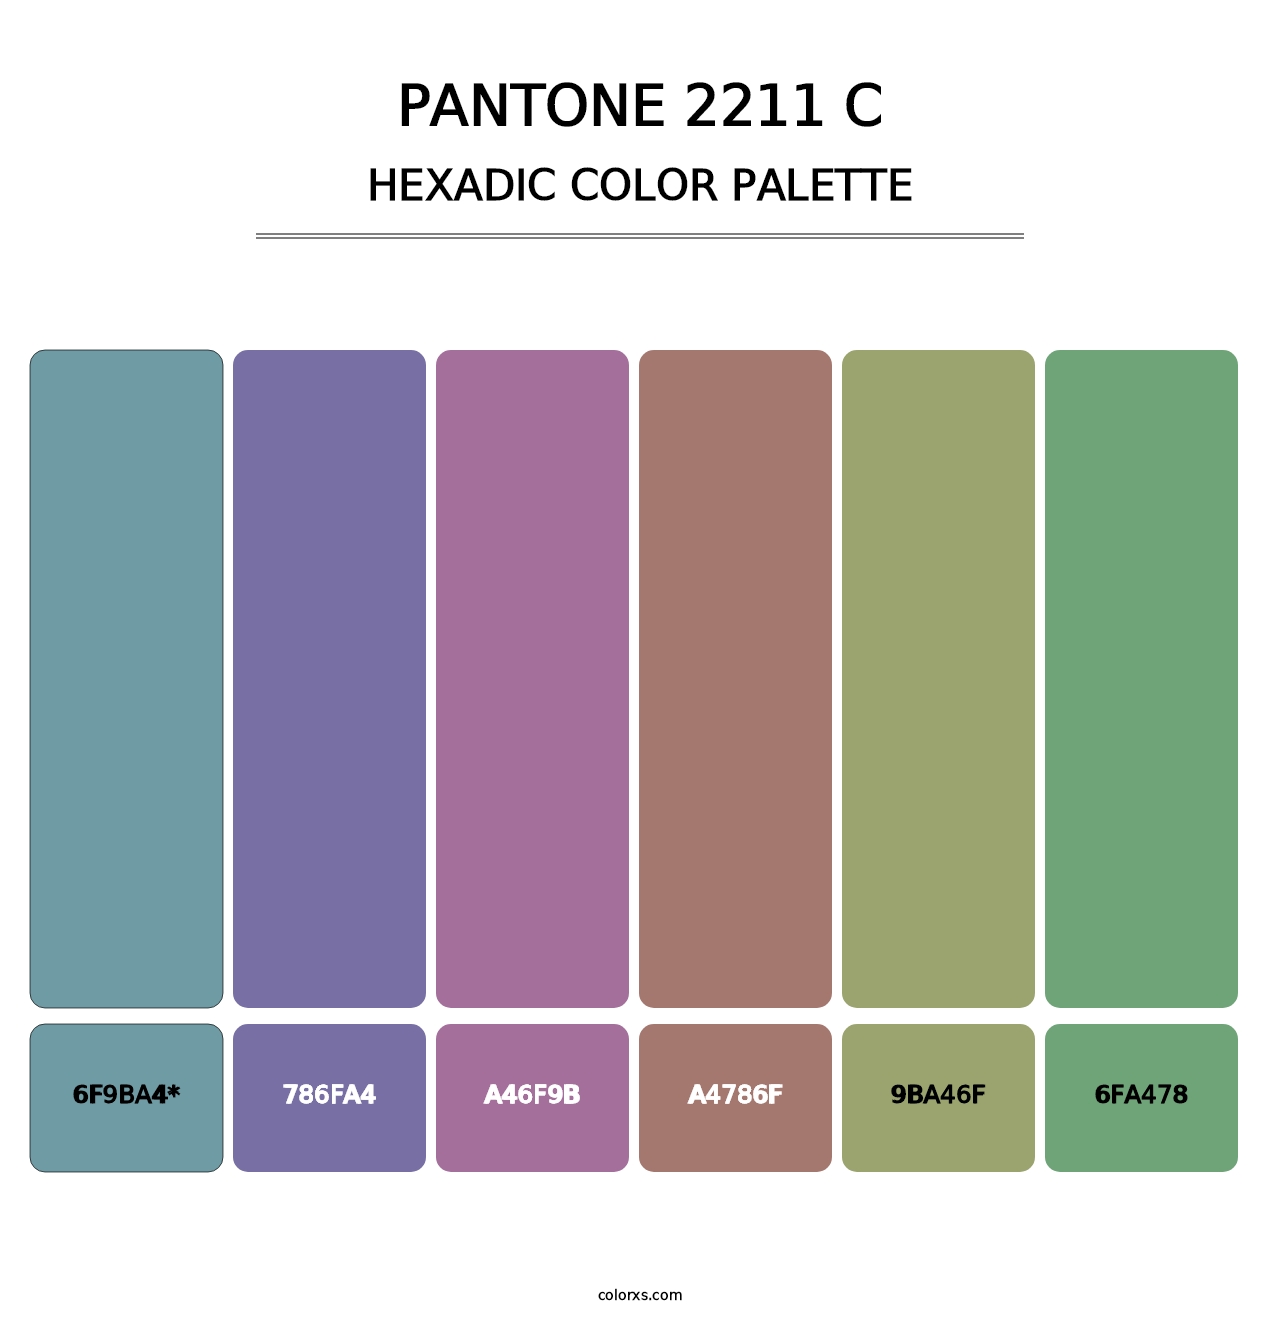 PANTONE 2211 C - Hexadic Color Palette